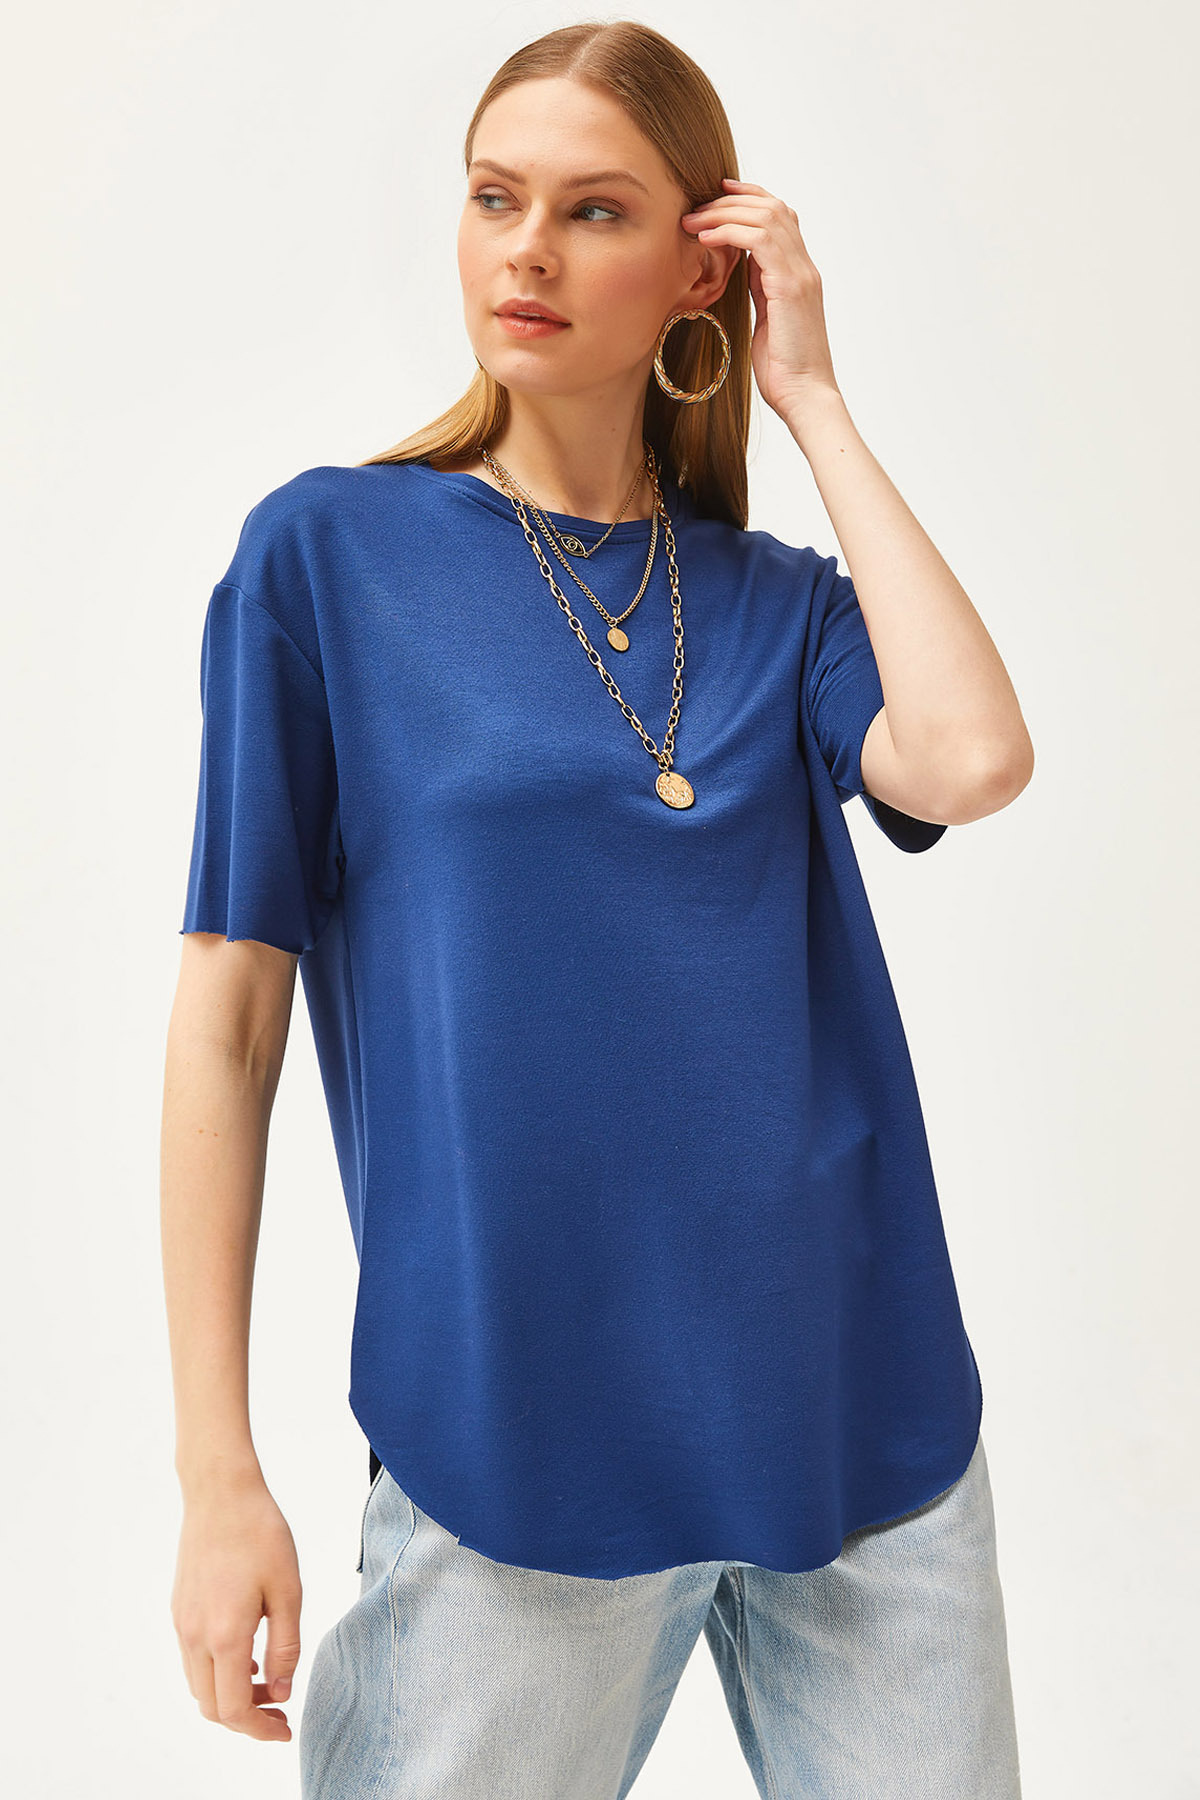 Olalook Women's Navy Blue Modal Touch Soft Textured Six Oval T-Shirt